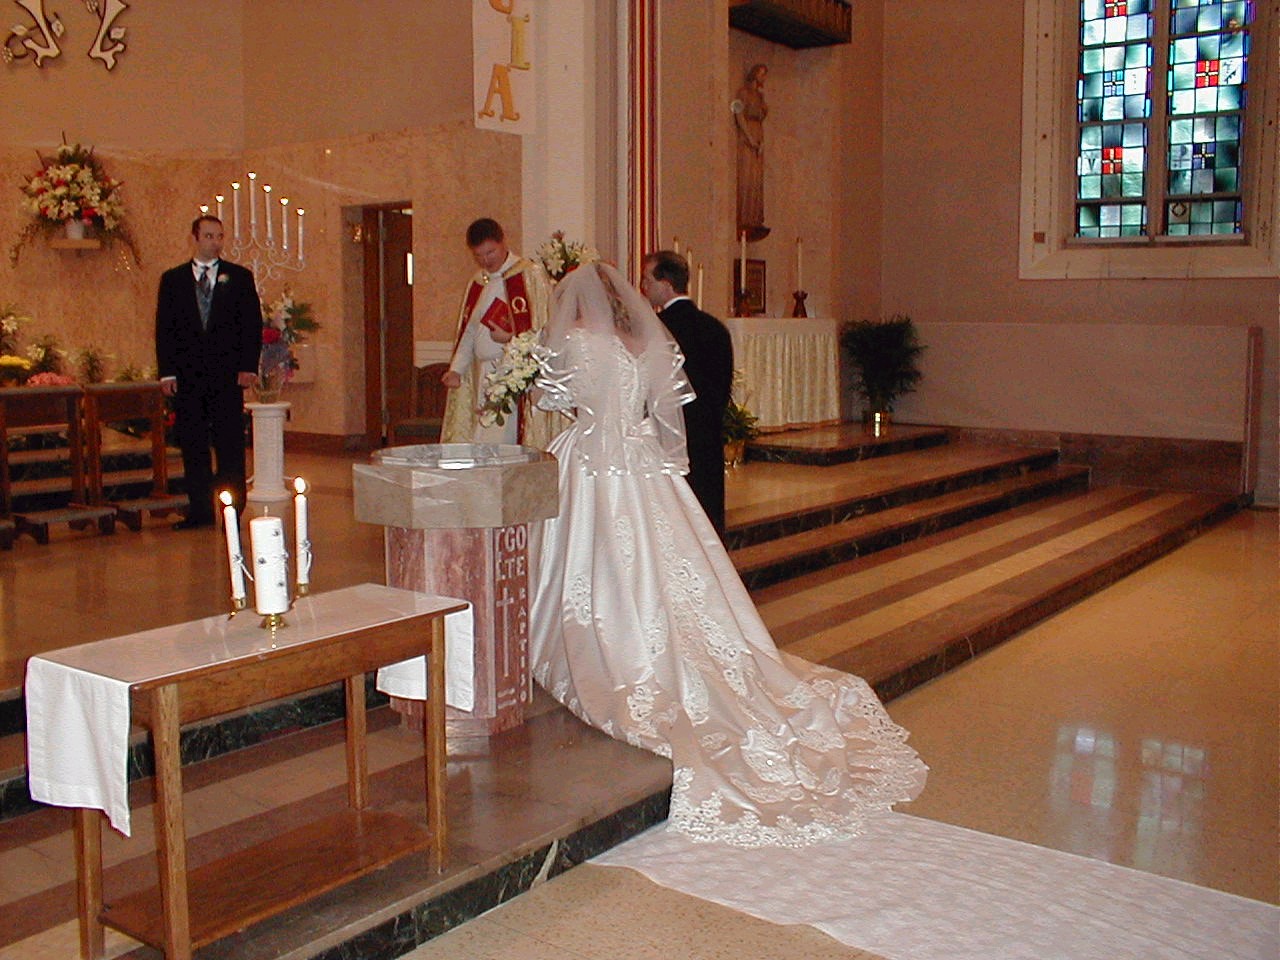 weddingceremony.bmp. Uploaded by Erik Hoffmann on 1/18/2004. 